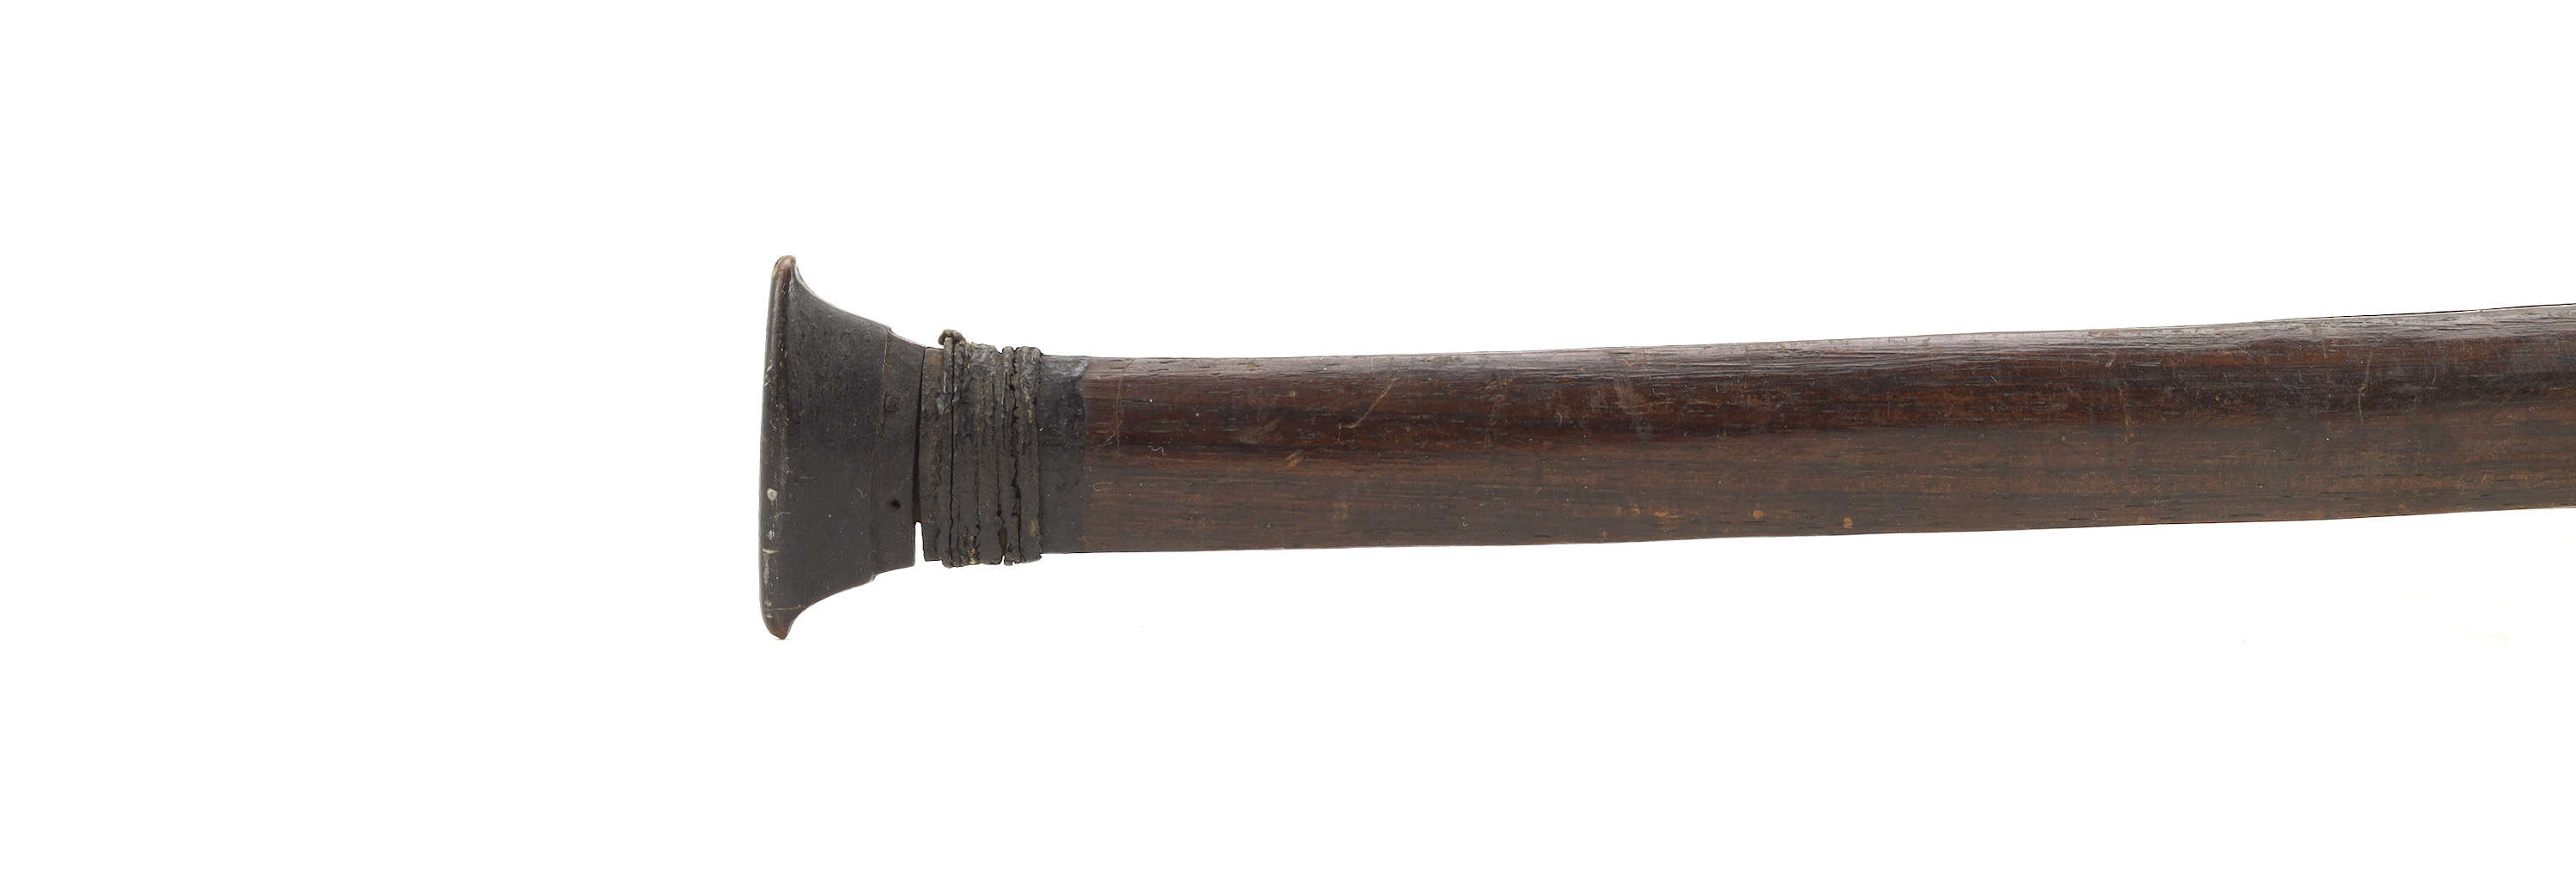 Old Javanese dagger with stiletto blade